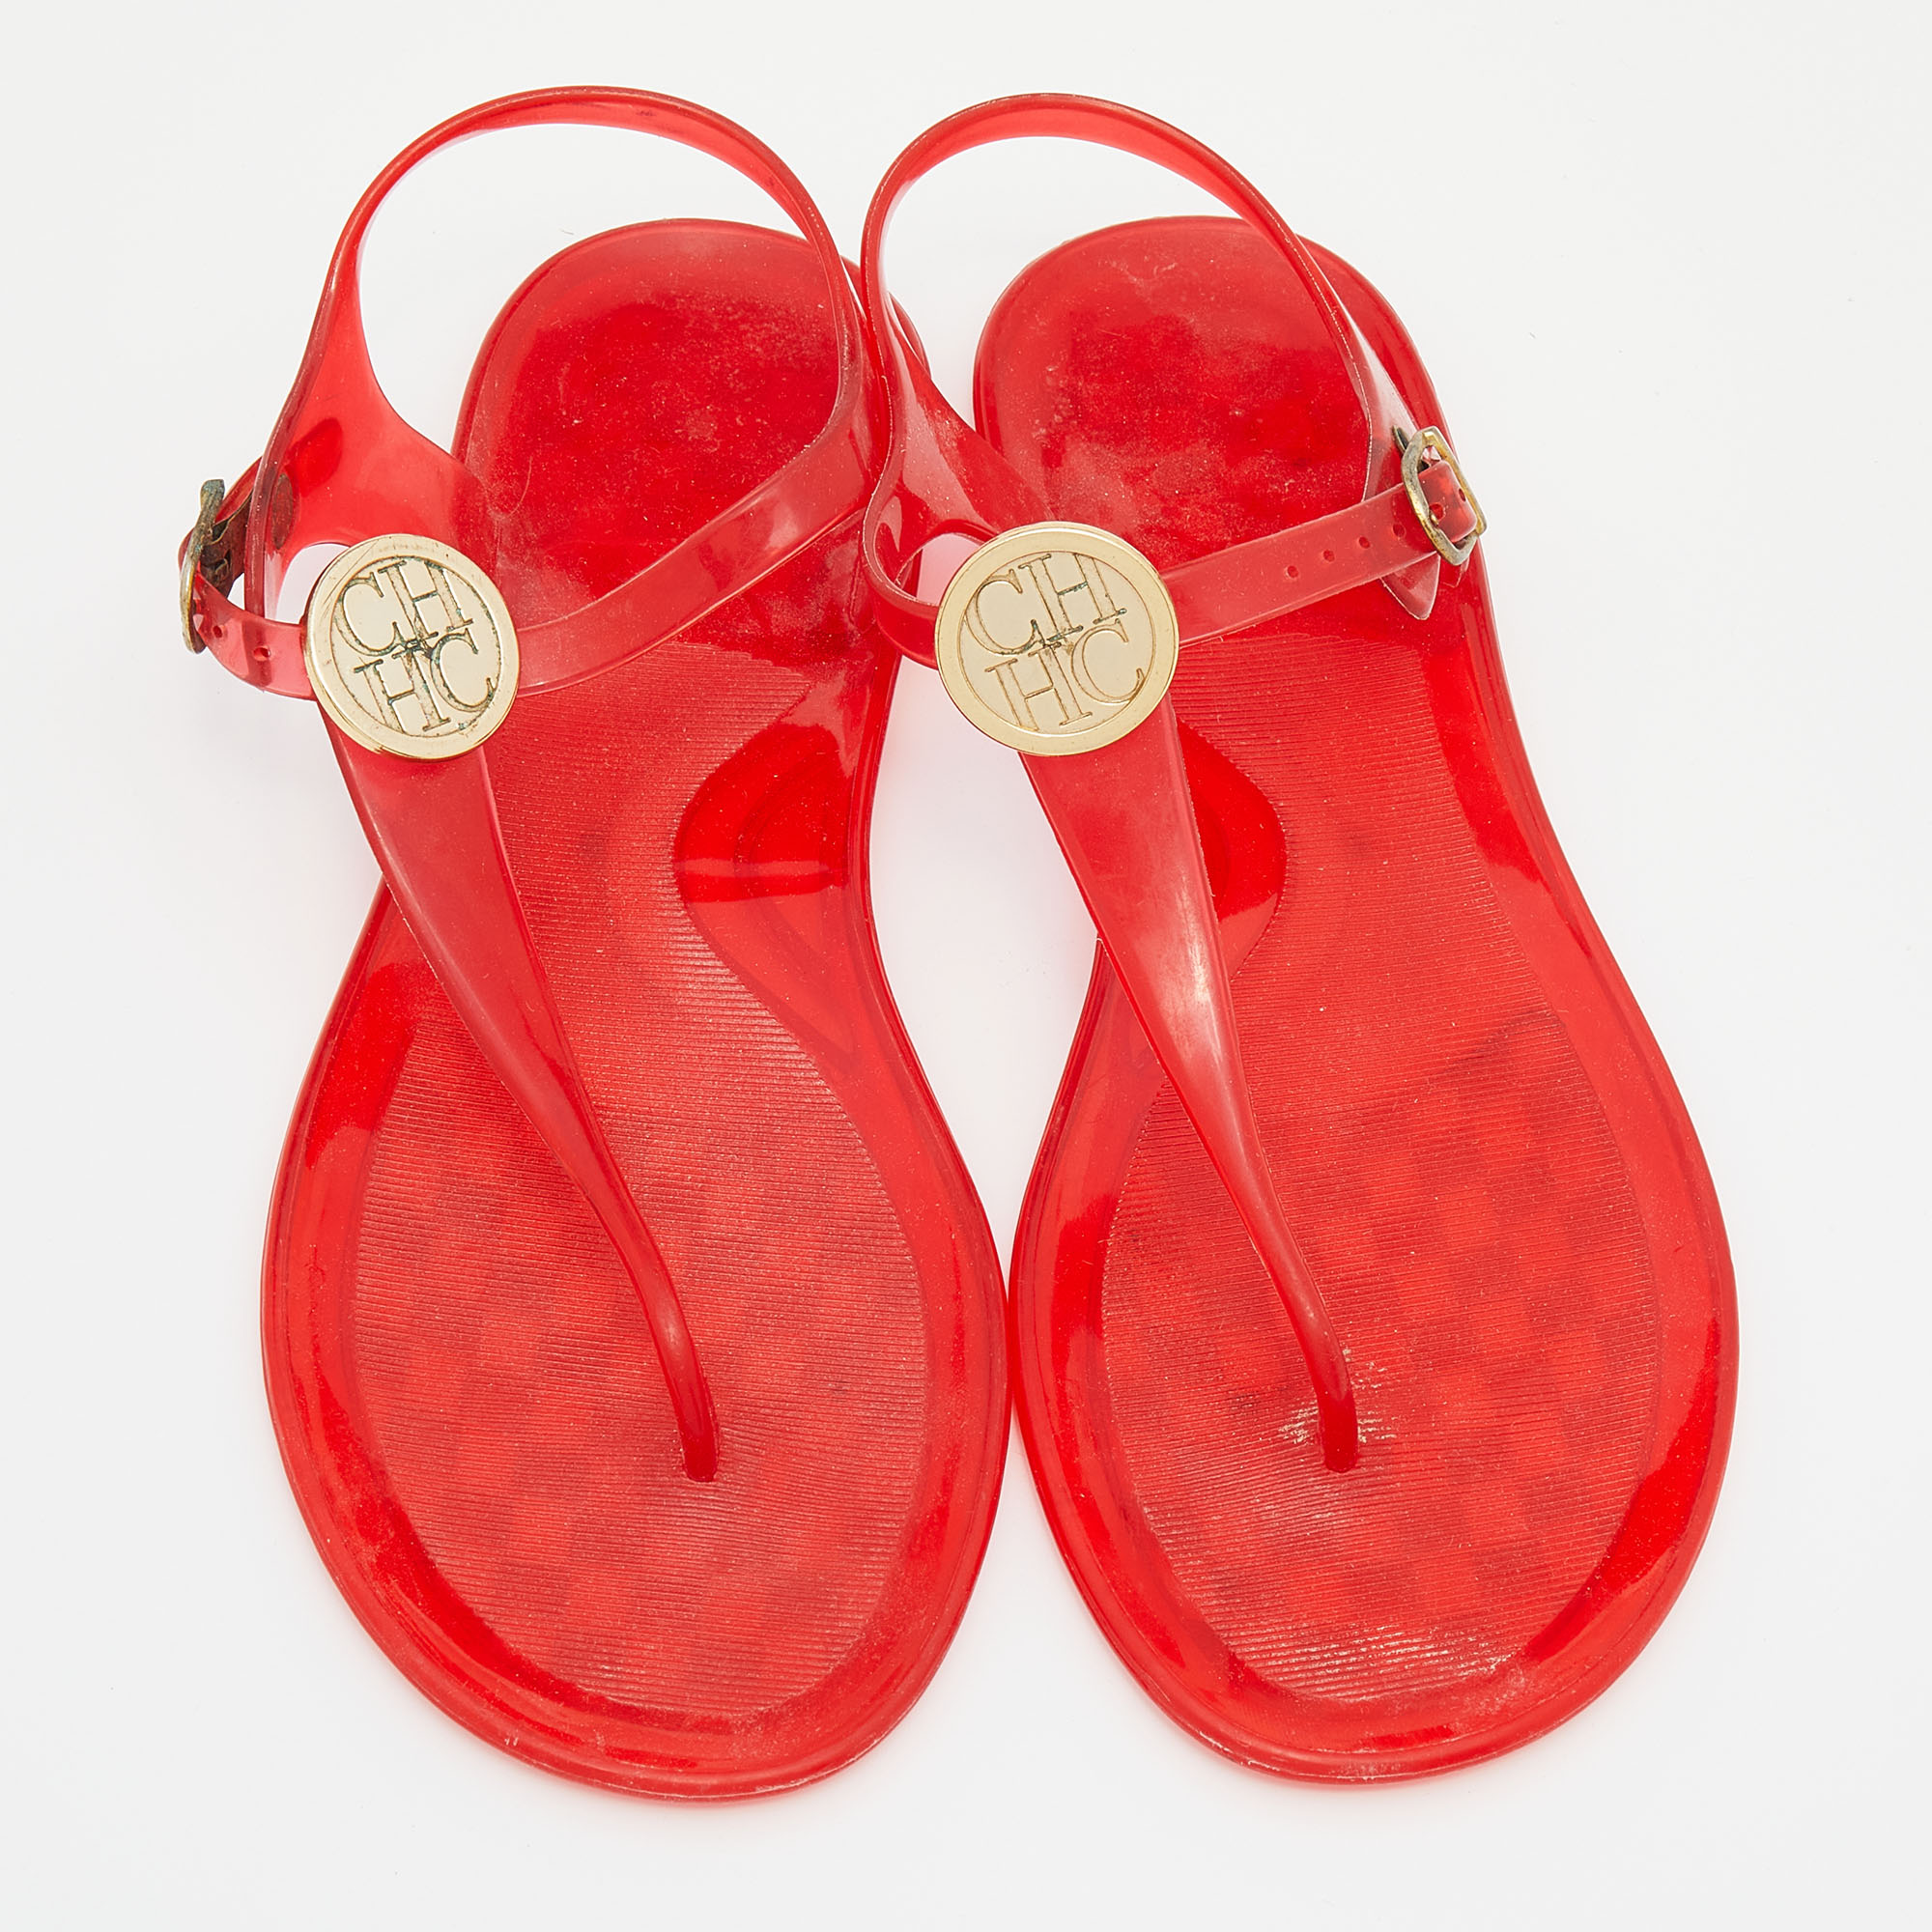 CH Arolina Herrera Red Rubber Logo Thong Flat Sandals Size 37